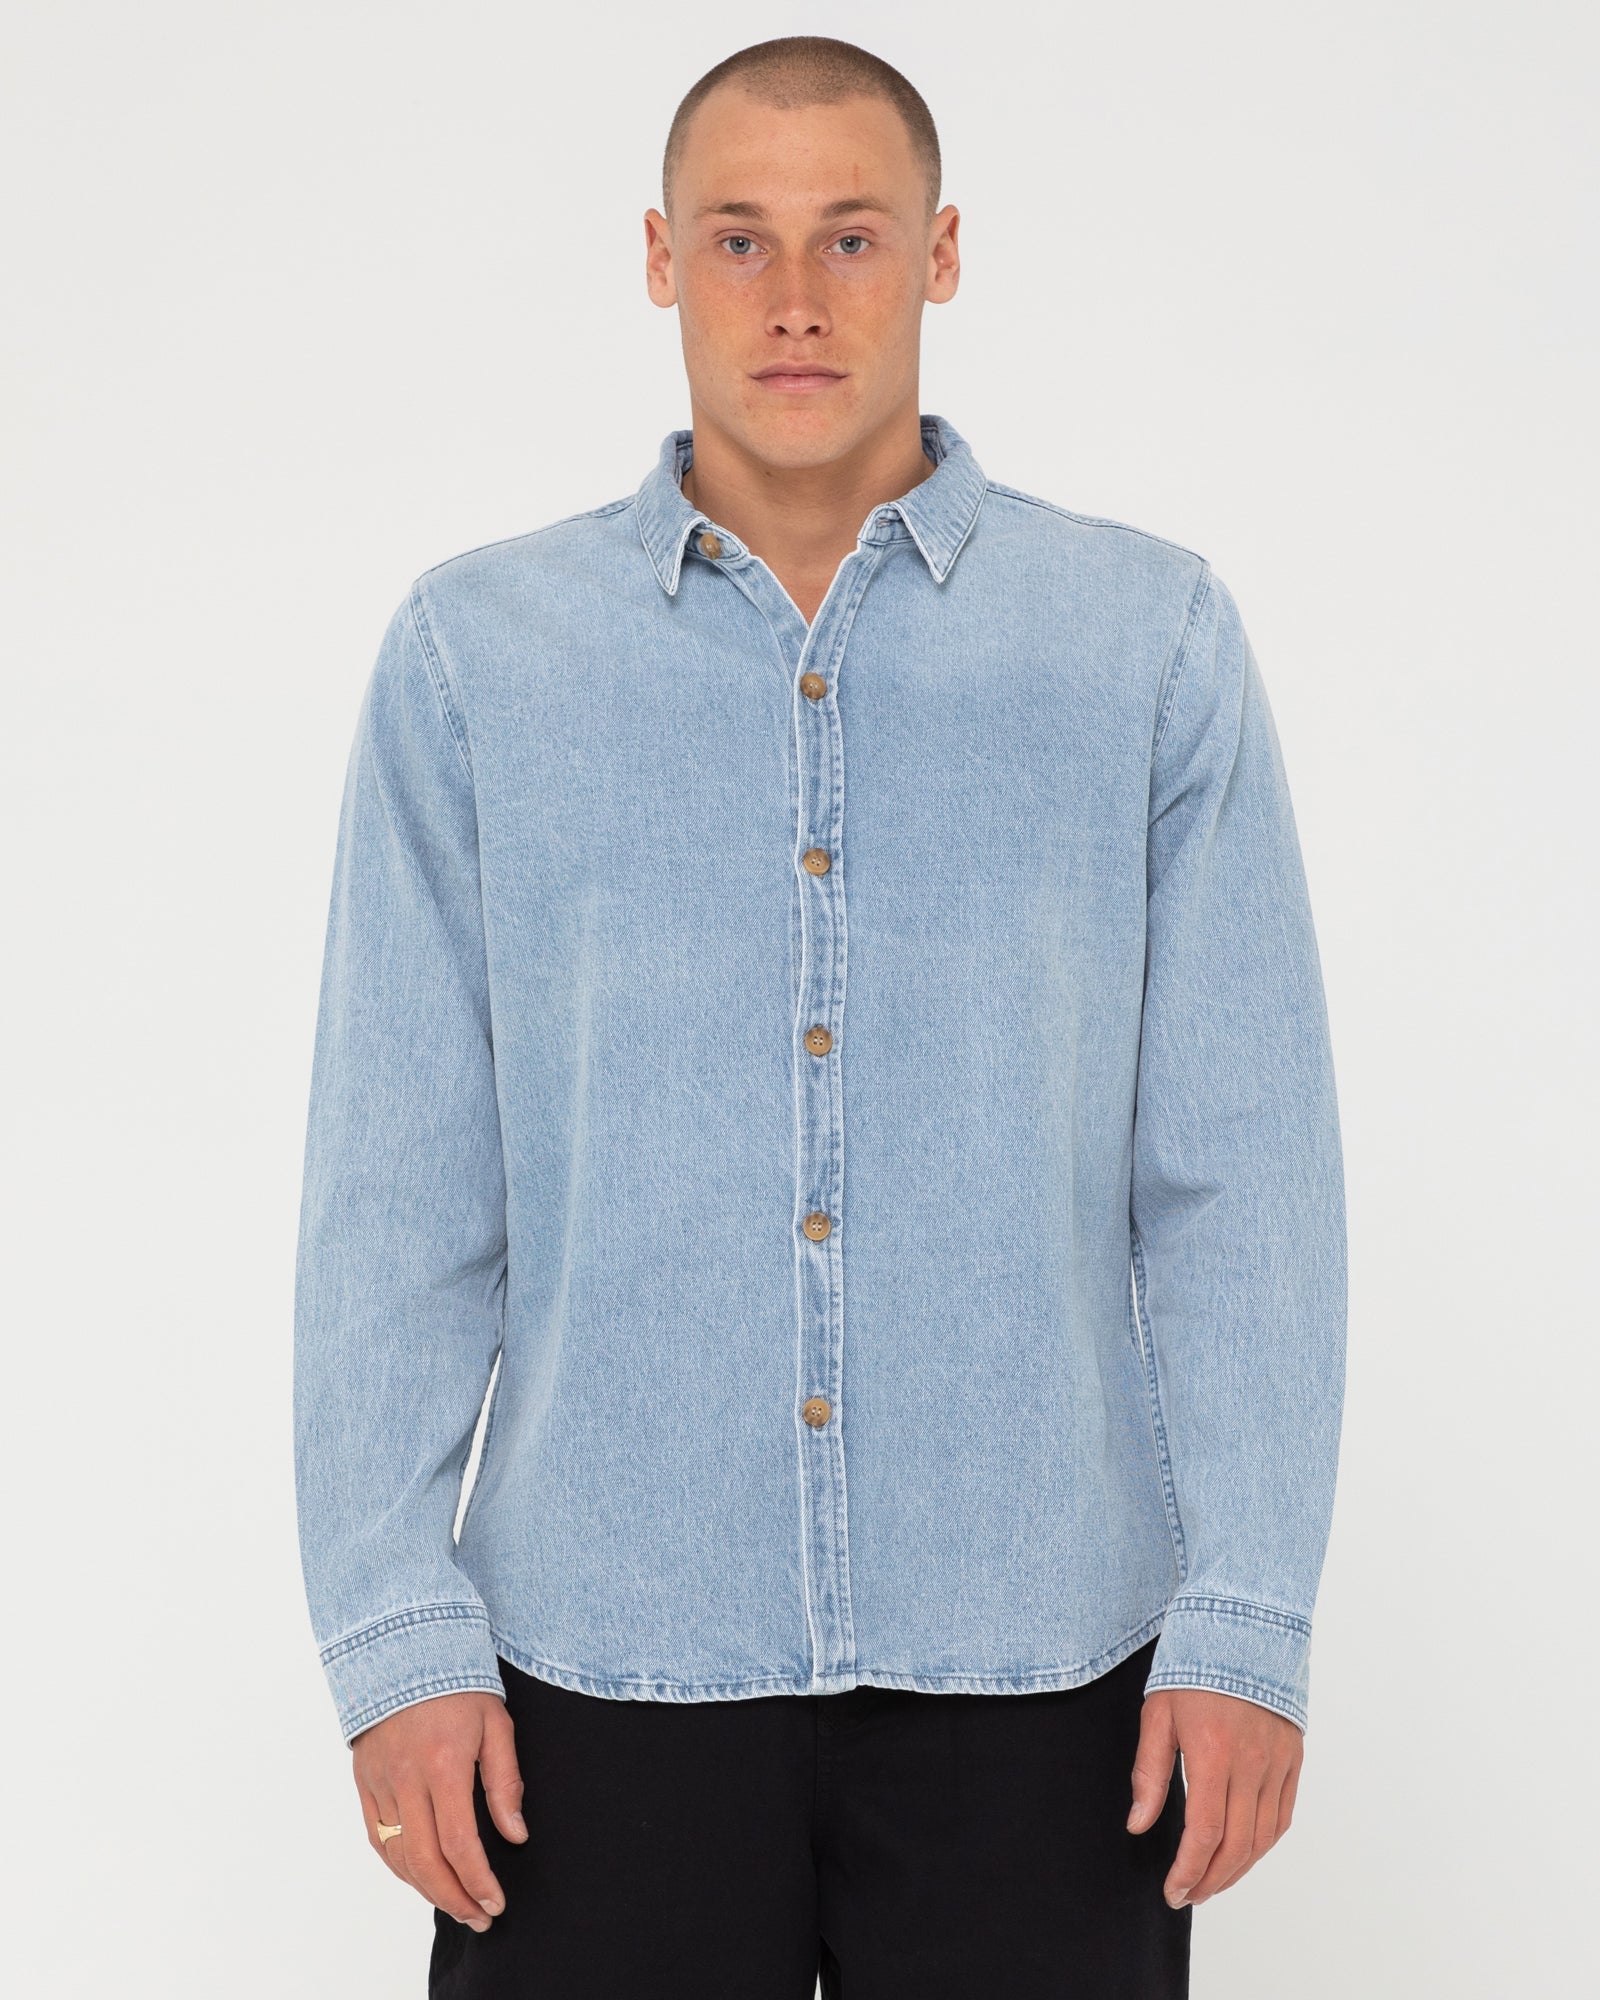 Buy Blue Washed Denim Full Sleeves Shirt for Men